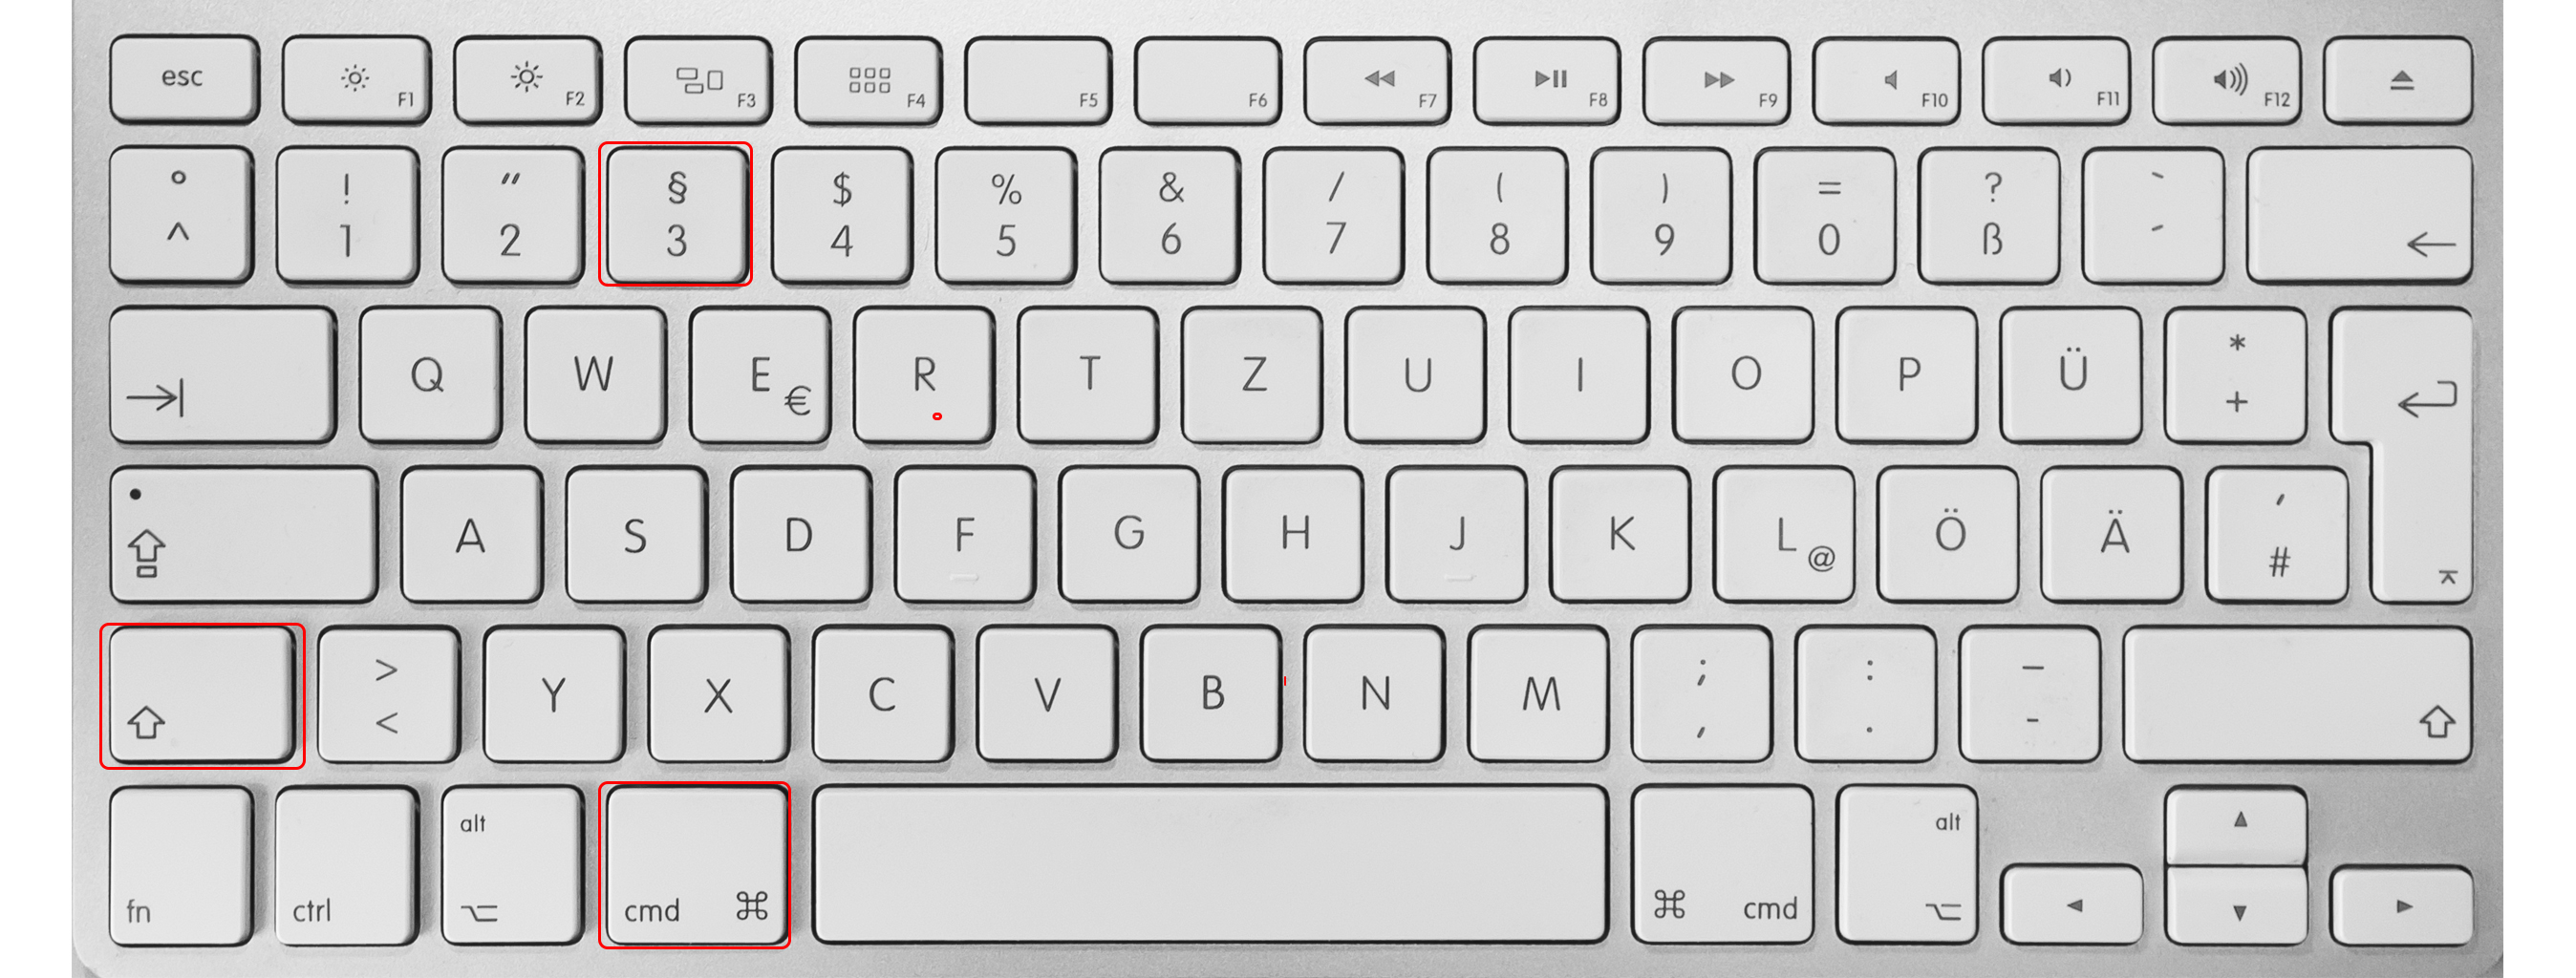 how to set print screen on apple keyboard